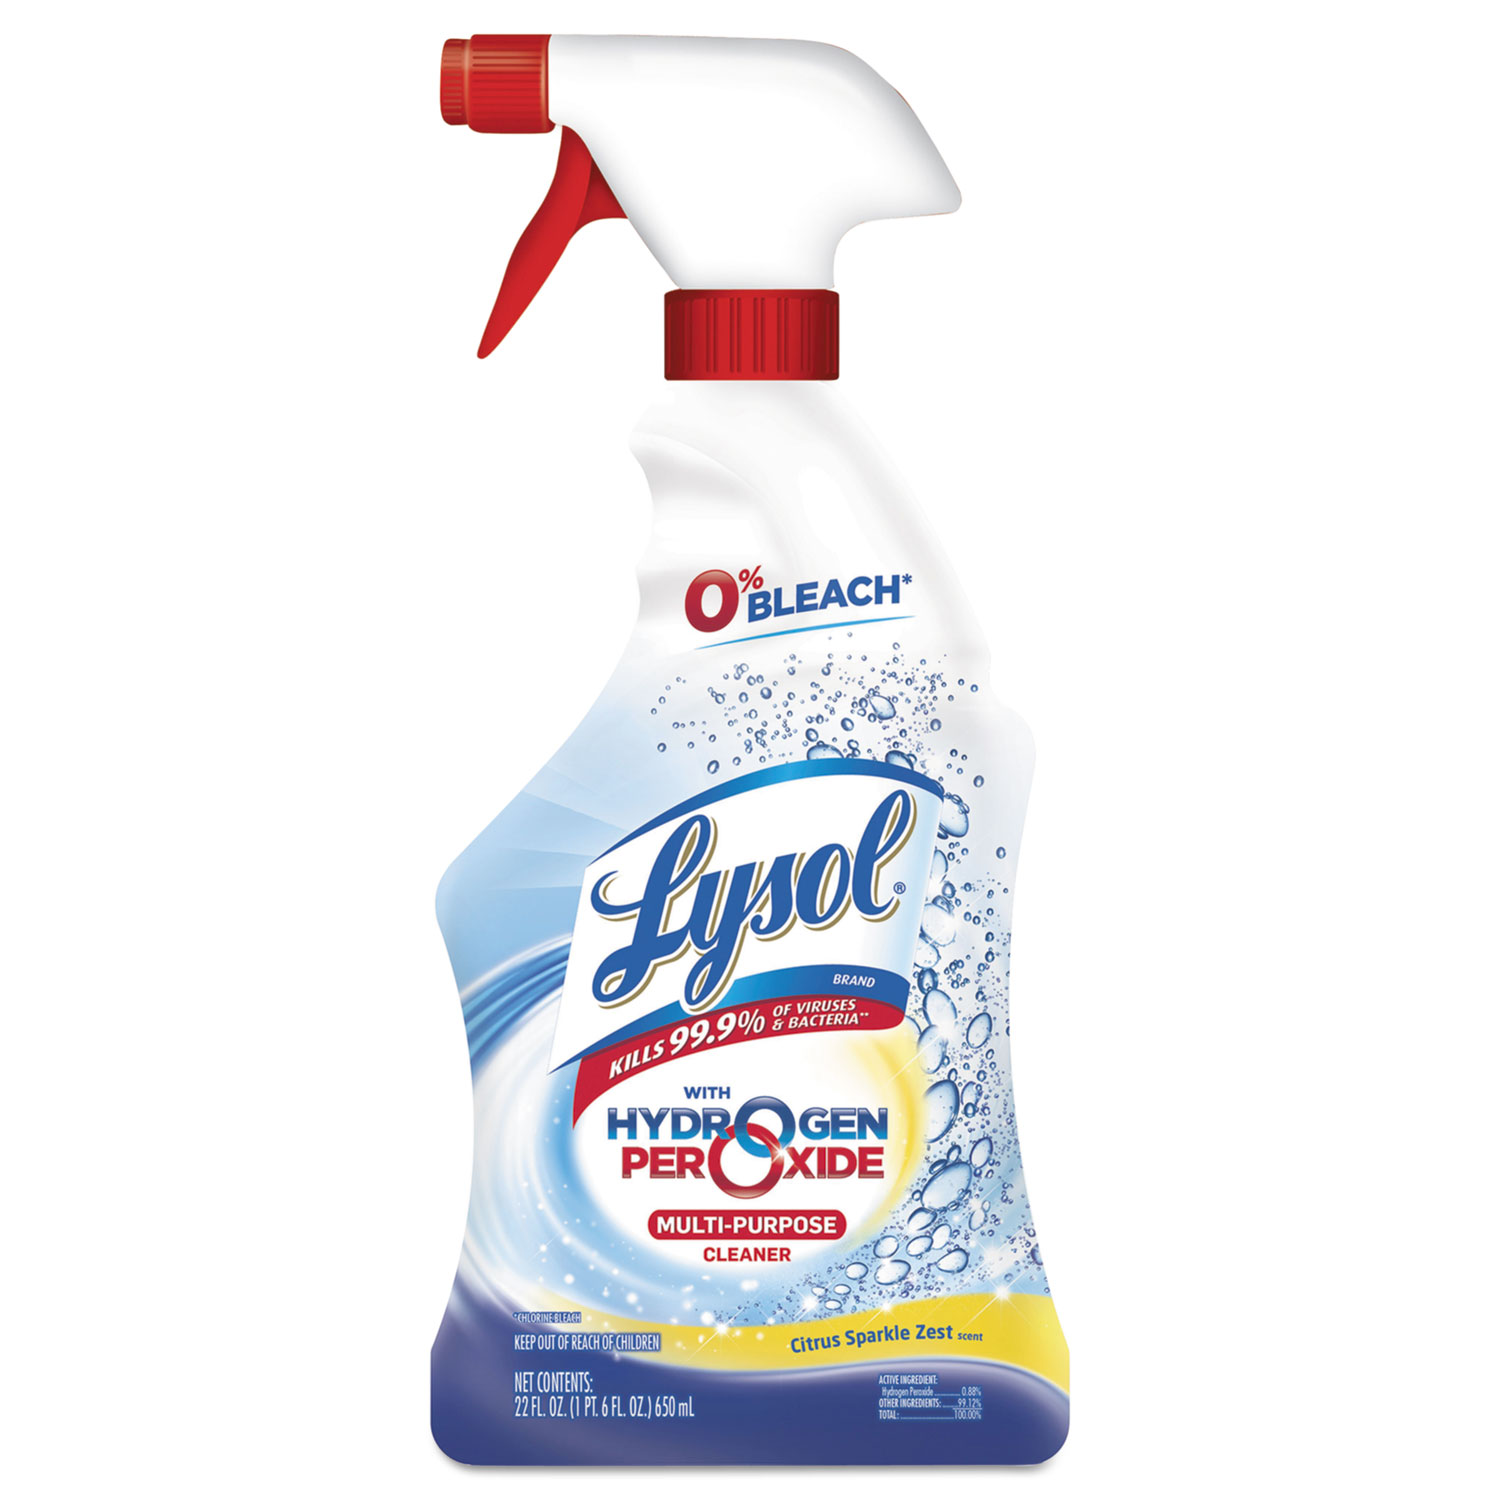 Lysol Multi-Purpose Cleaner With Hydrogen Peroxide : Citrus Sparkle Zest